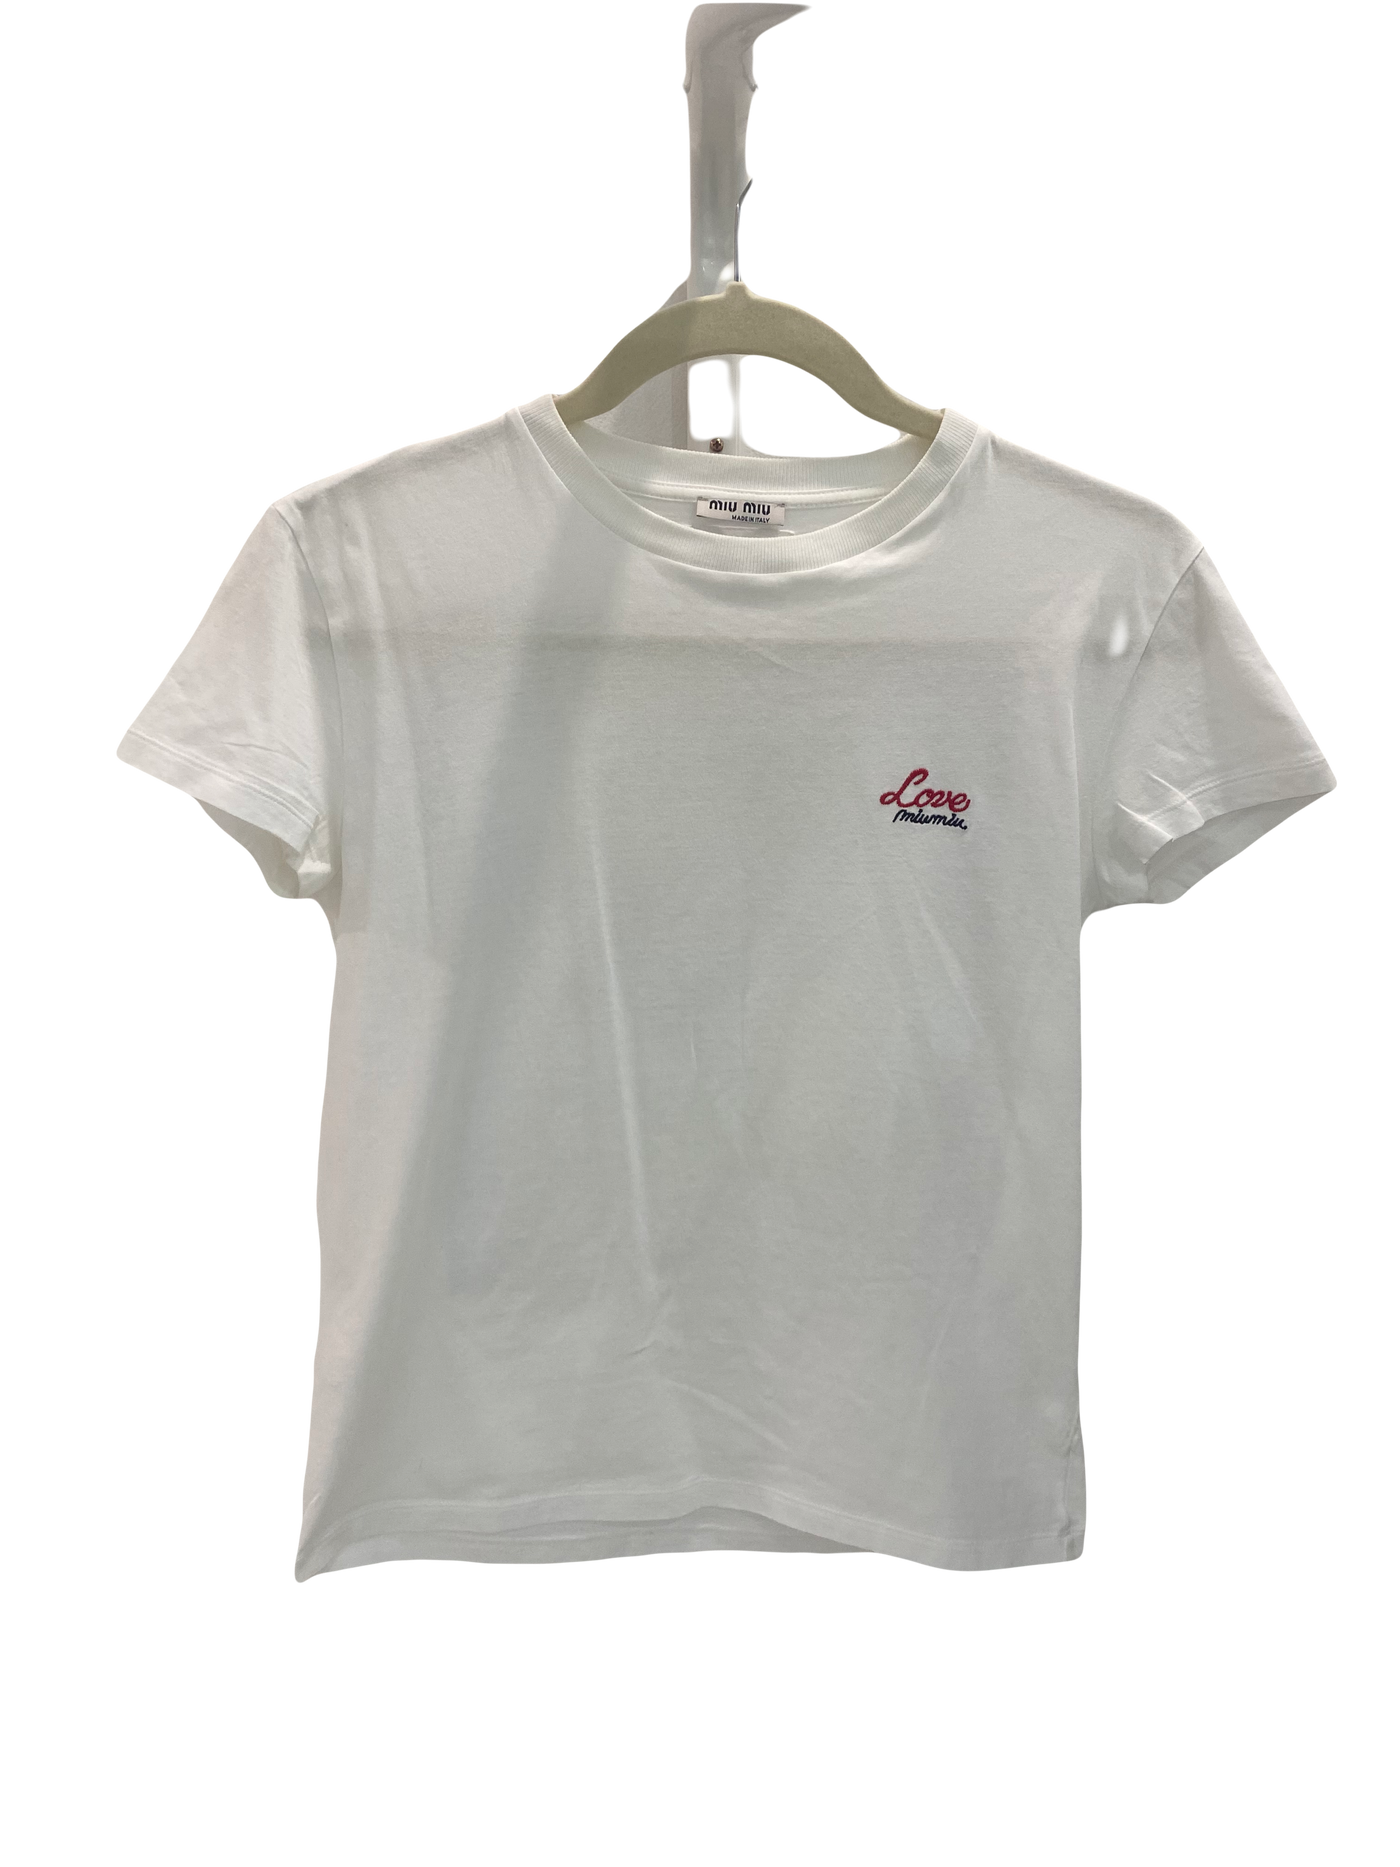 Miu Miu T-Shirt XS - SOLD